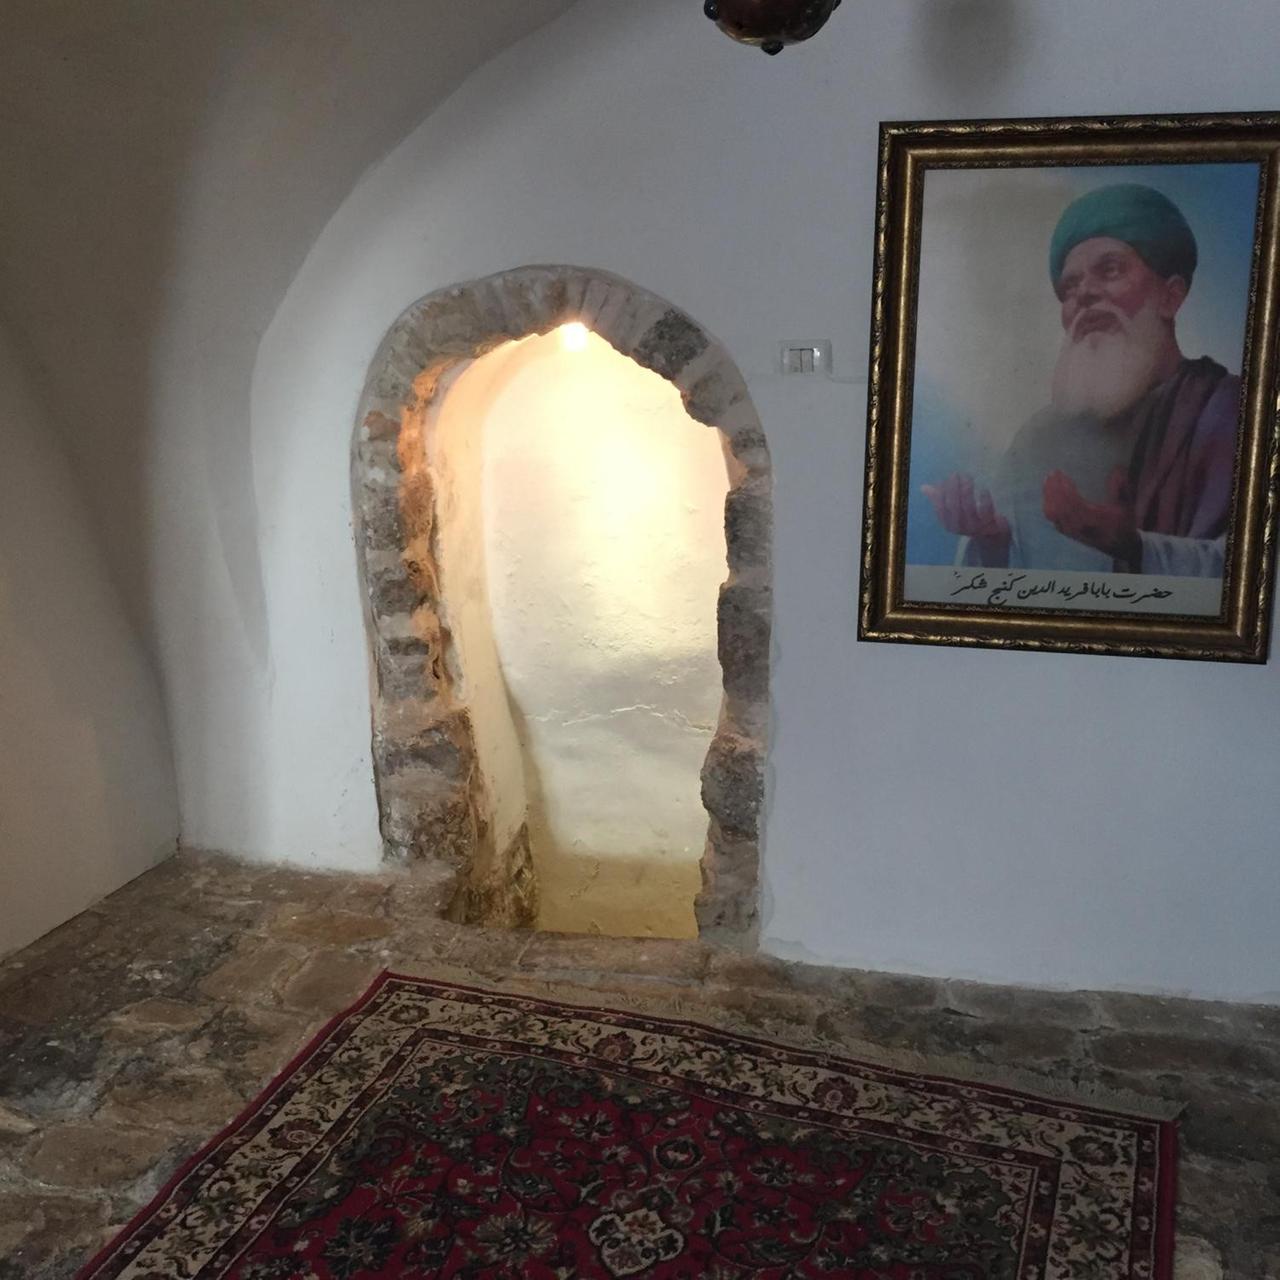 Eingang zum Keller, in dem Baba Farid meditiert haben soll